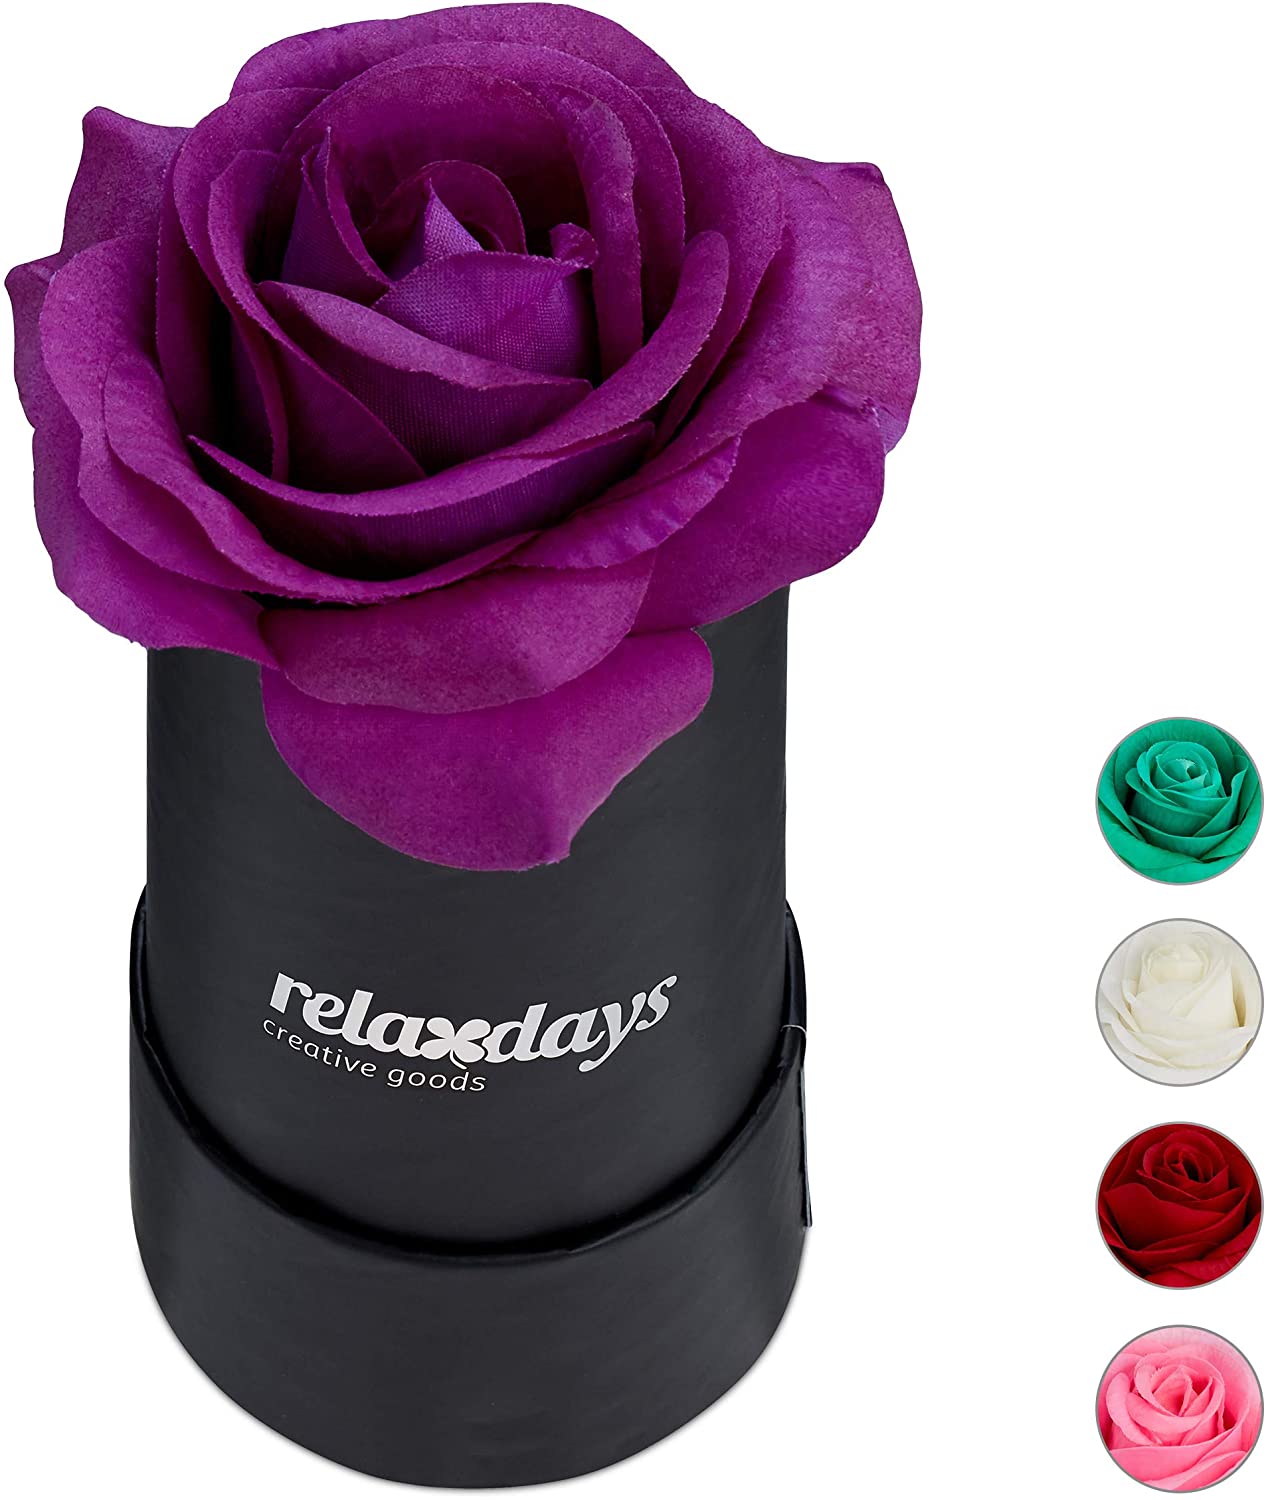 Relaxdays Roses Box Round 1 Rose Flower Box Black 10 Year Shelf Life Gift I